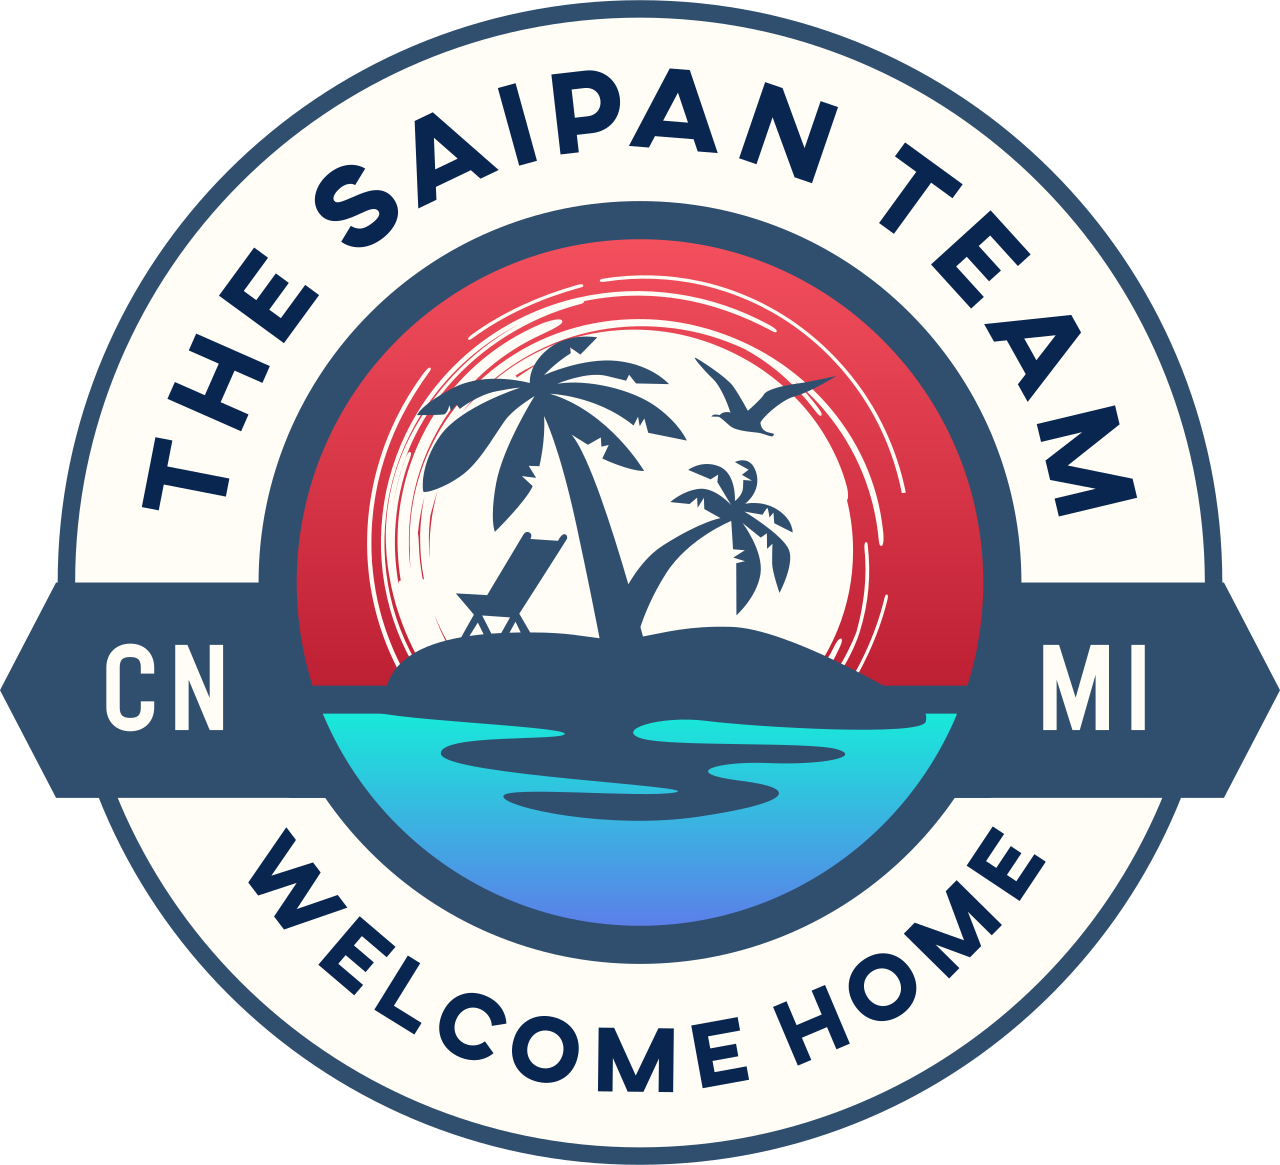 The Saipan Team